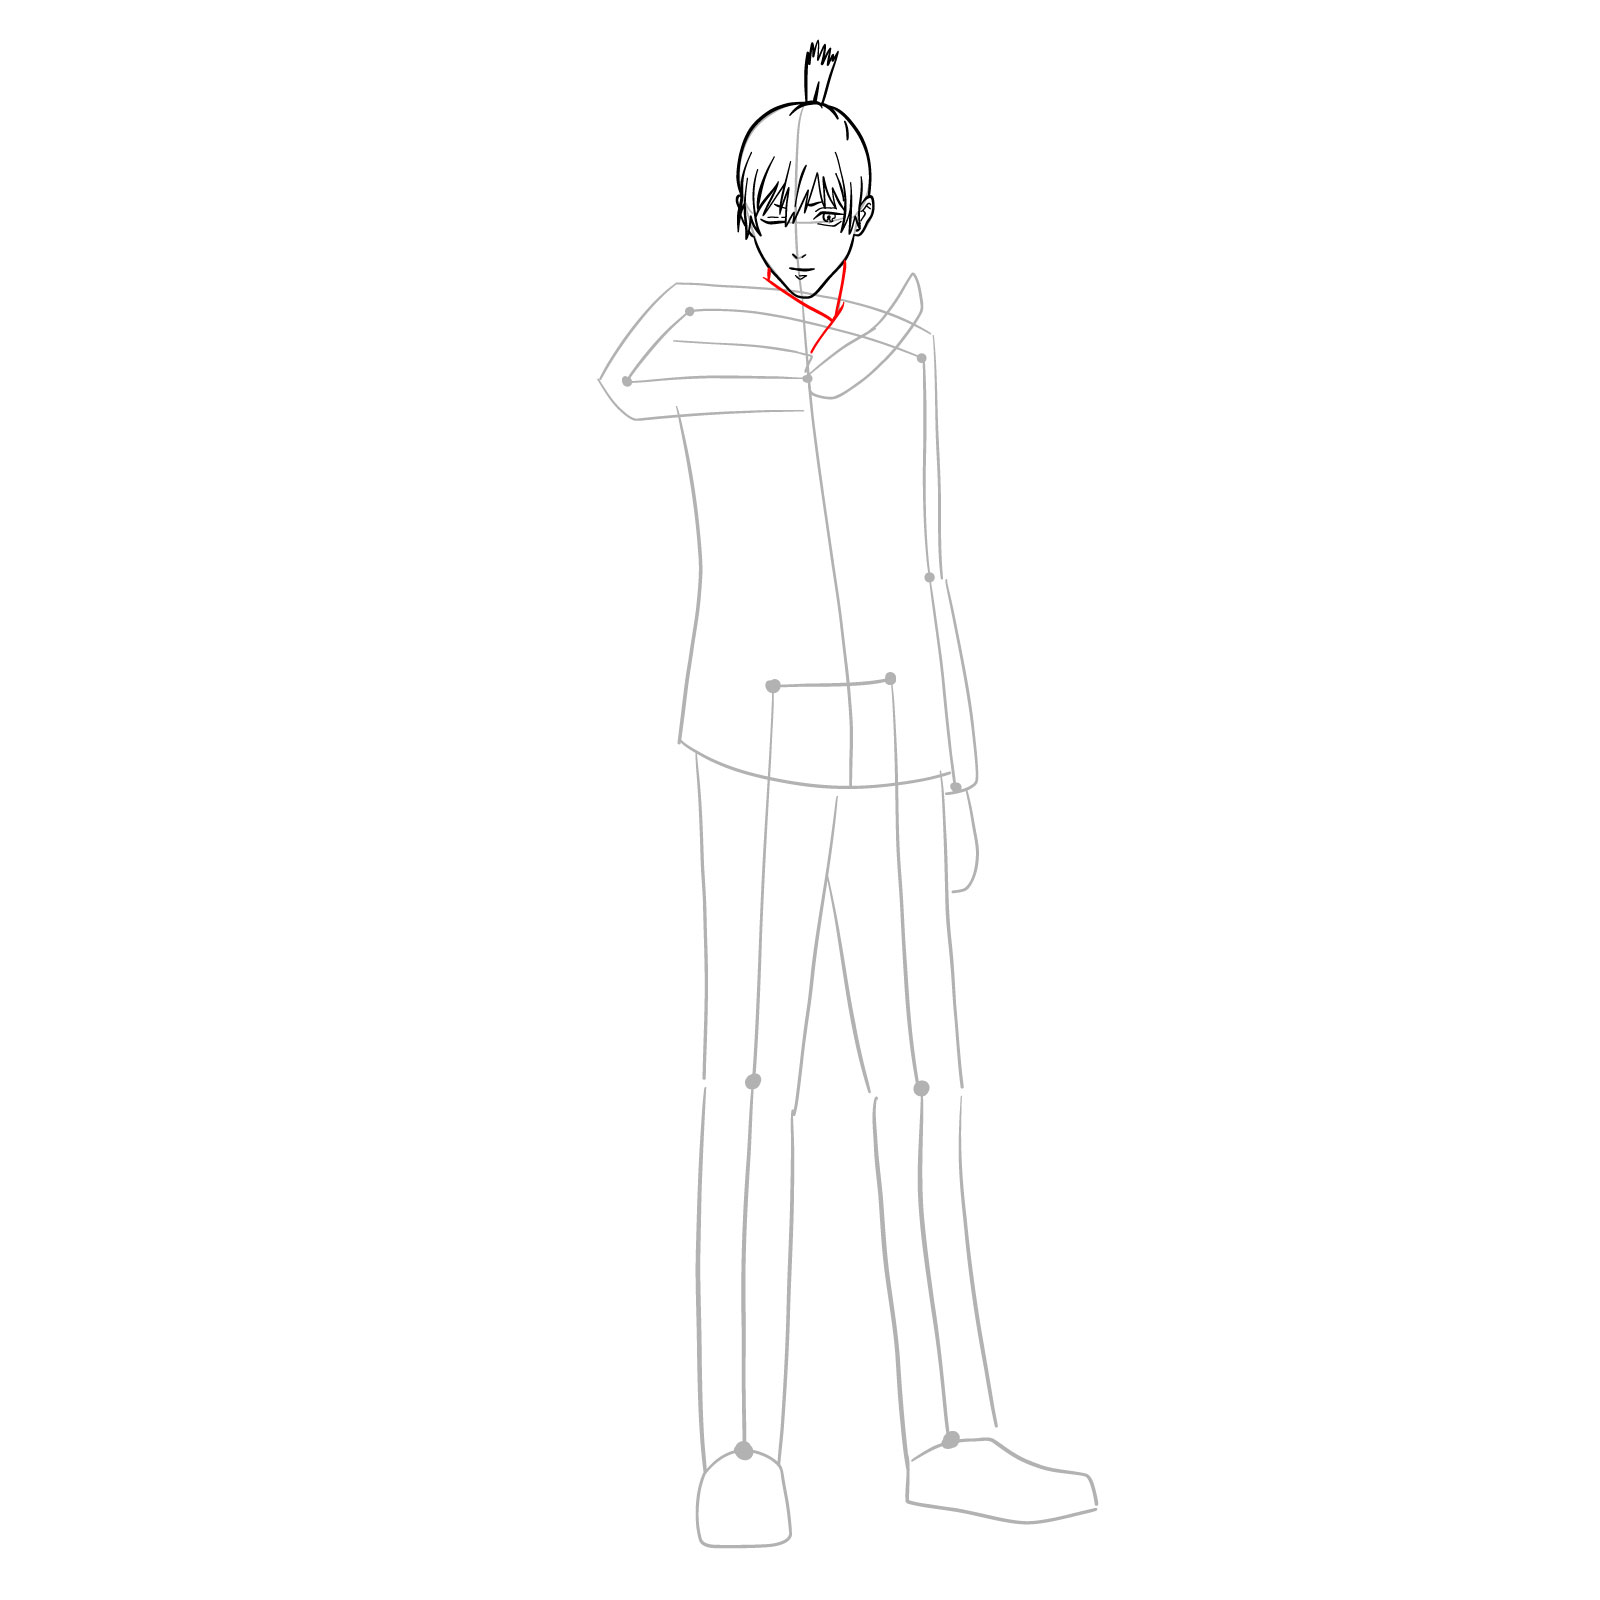 Anime Sweatpants Drawing